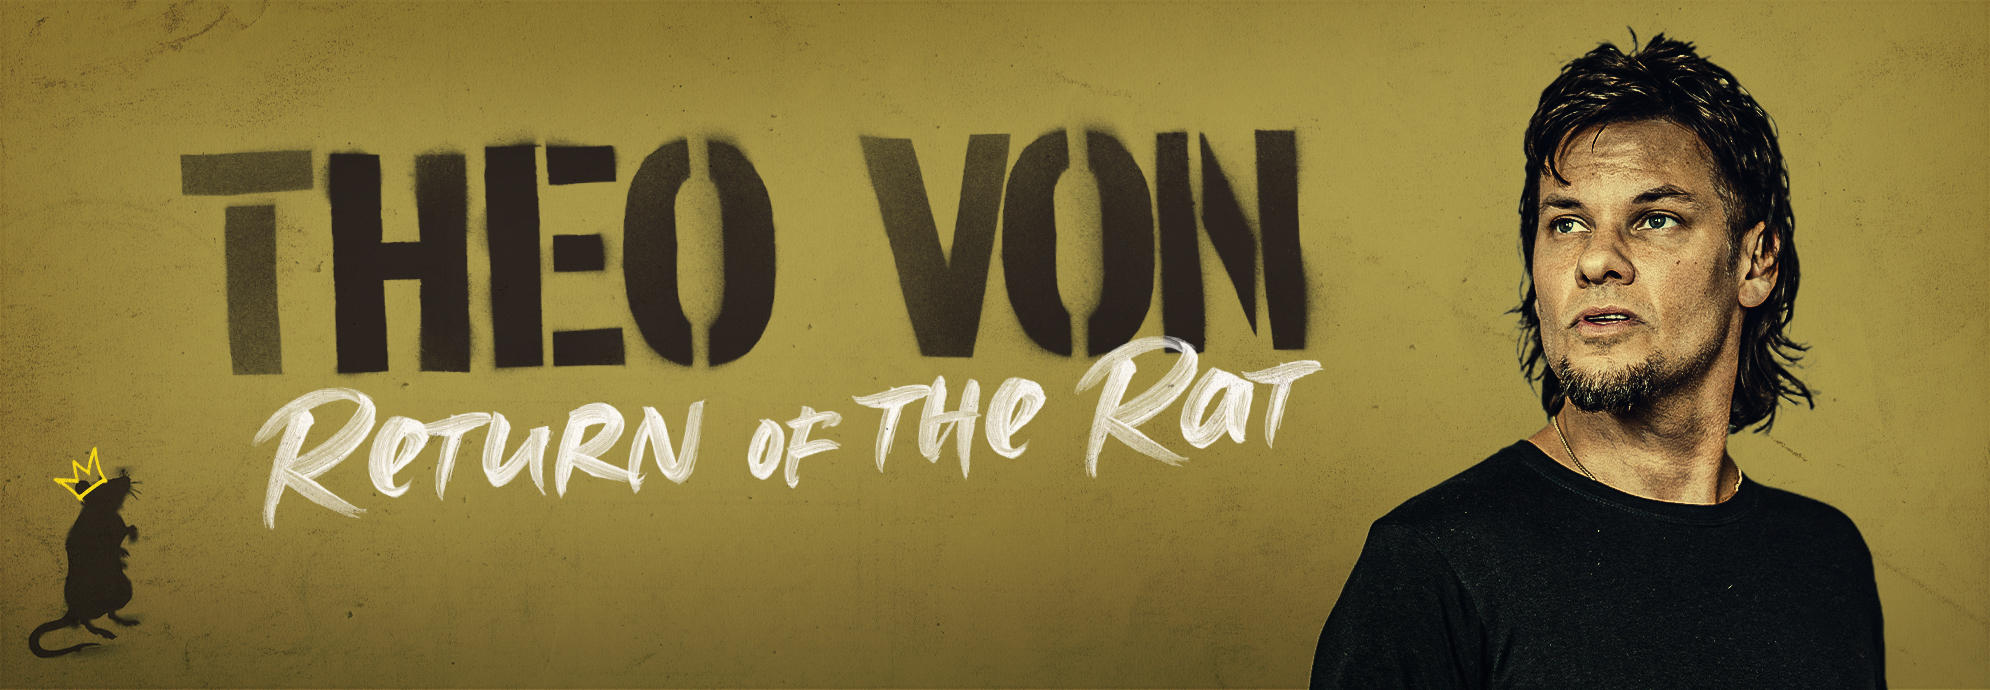 THEO VON: Return of the Rat